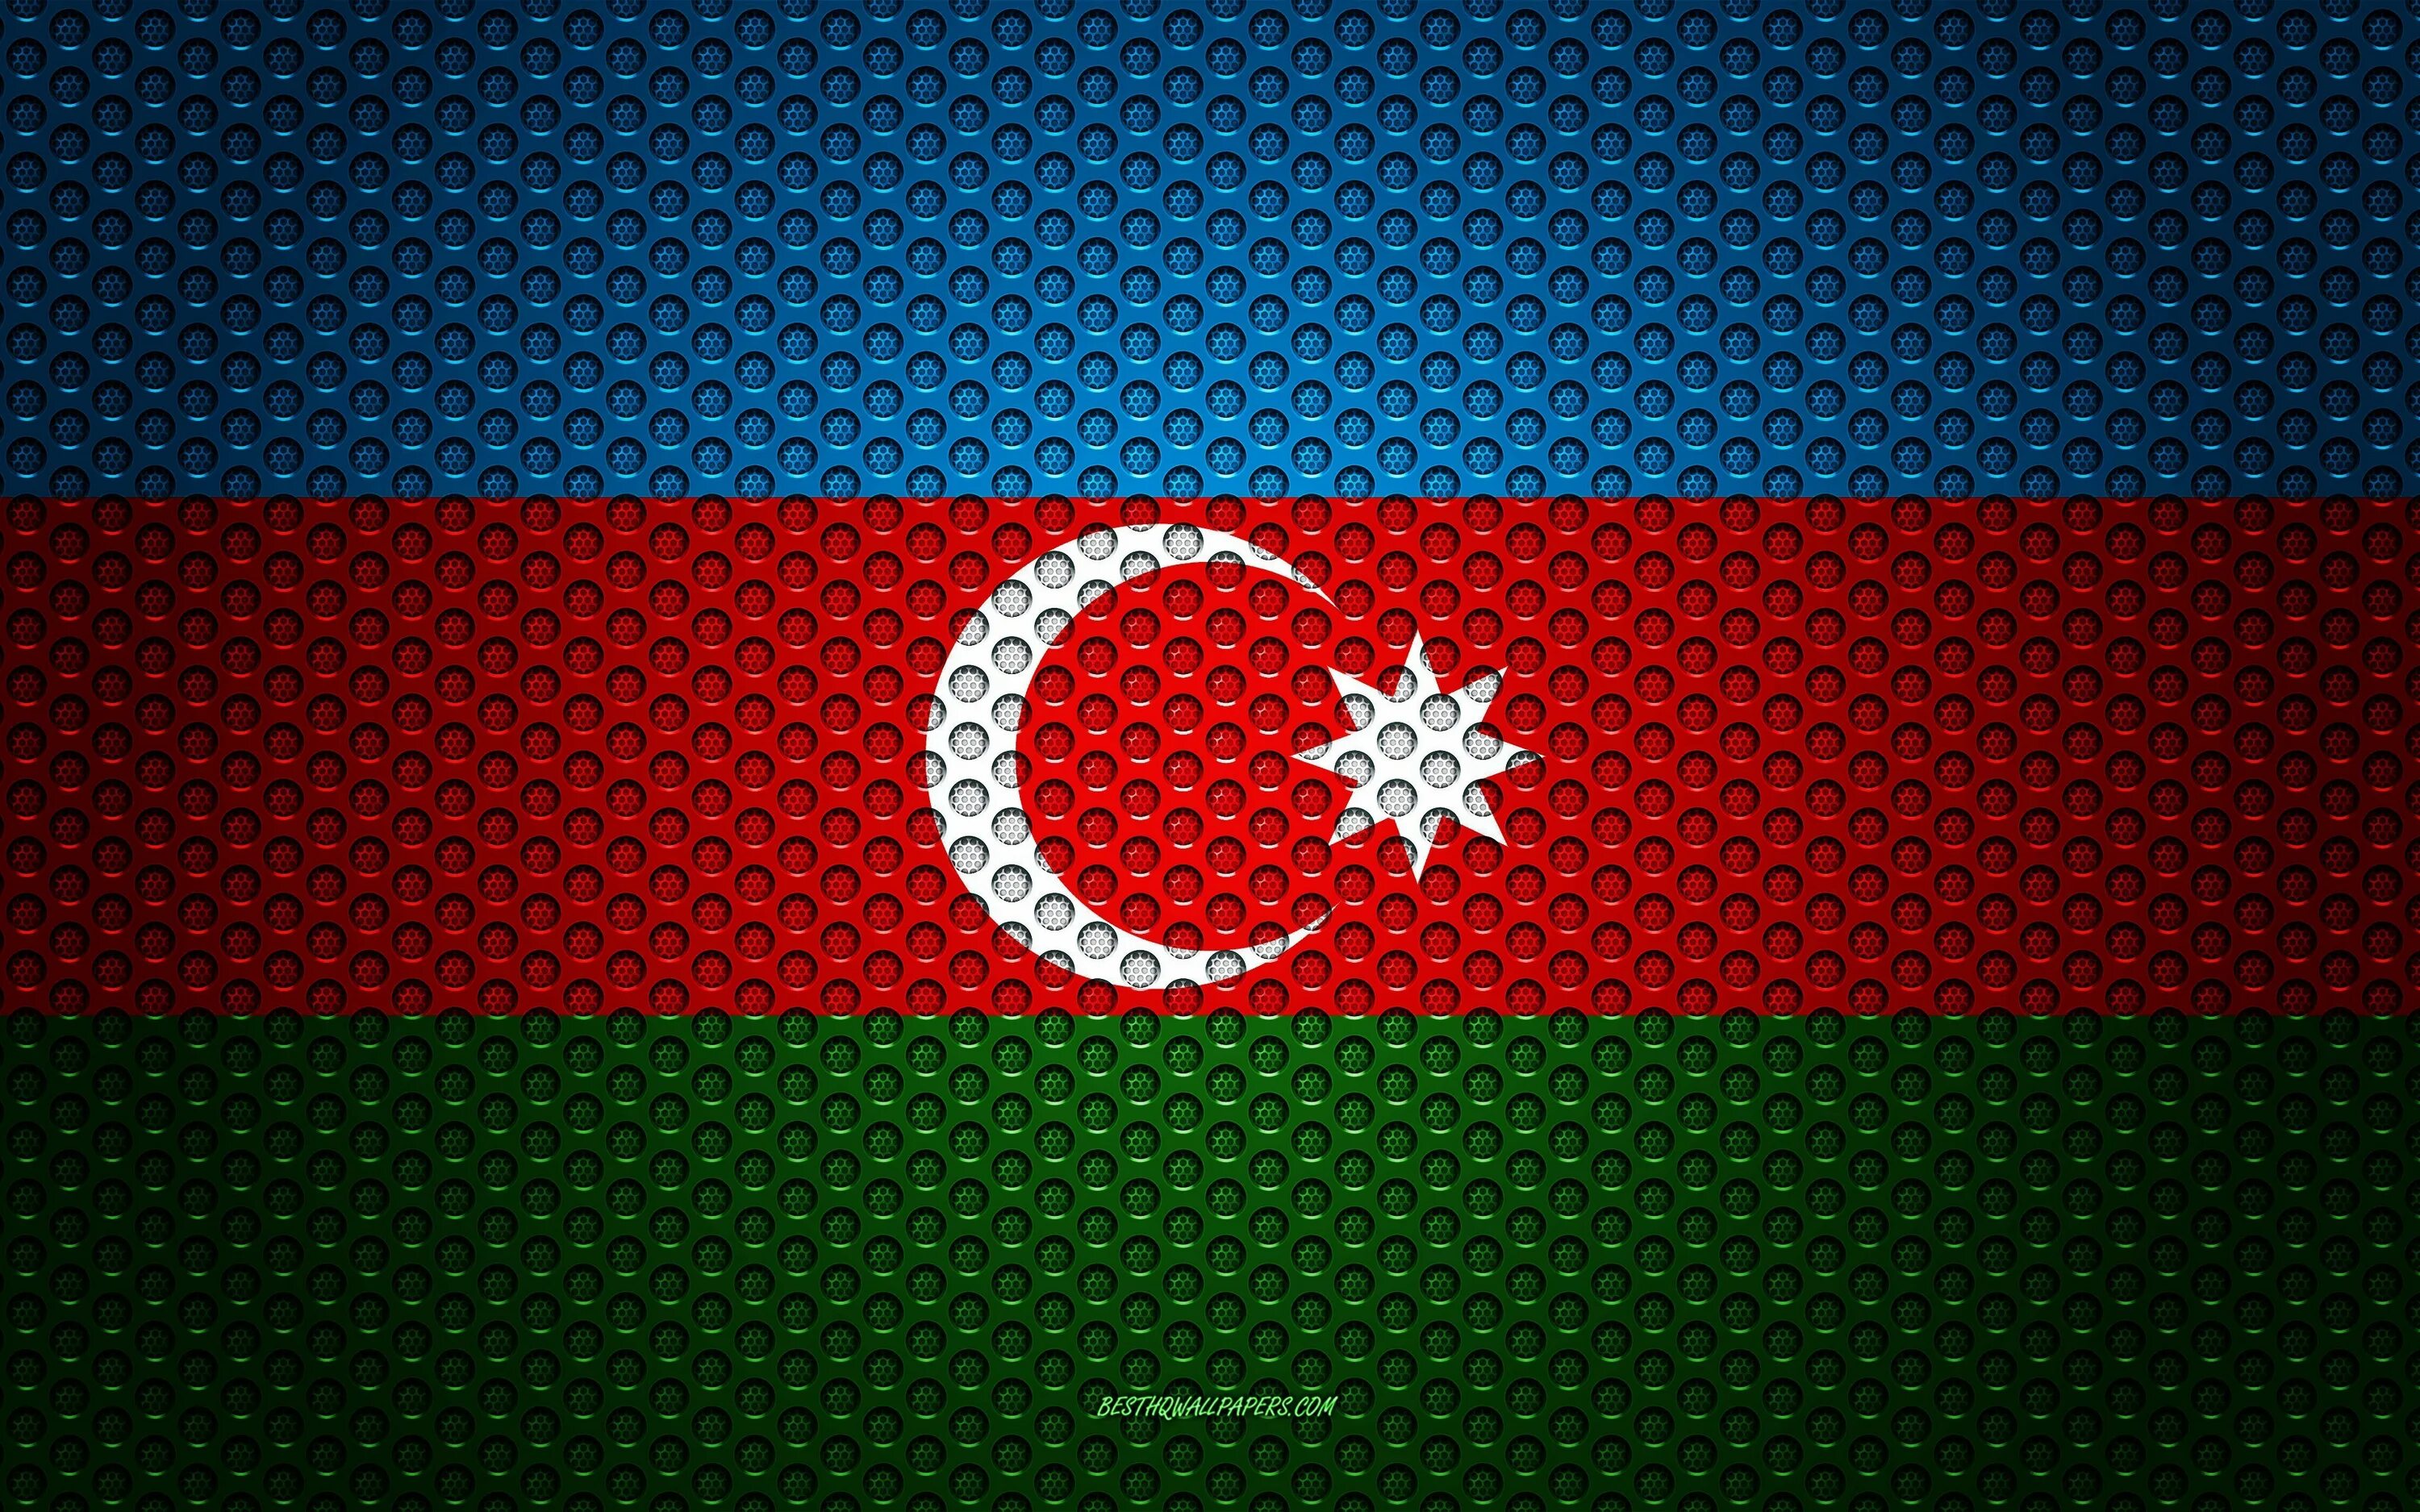 Айфон азербайджан. Флаг Азербайджана. Флаг азербайджанской Республики. Флаг АЙЗЕРБАРЖАН.